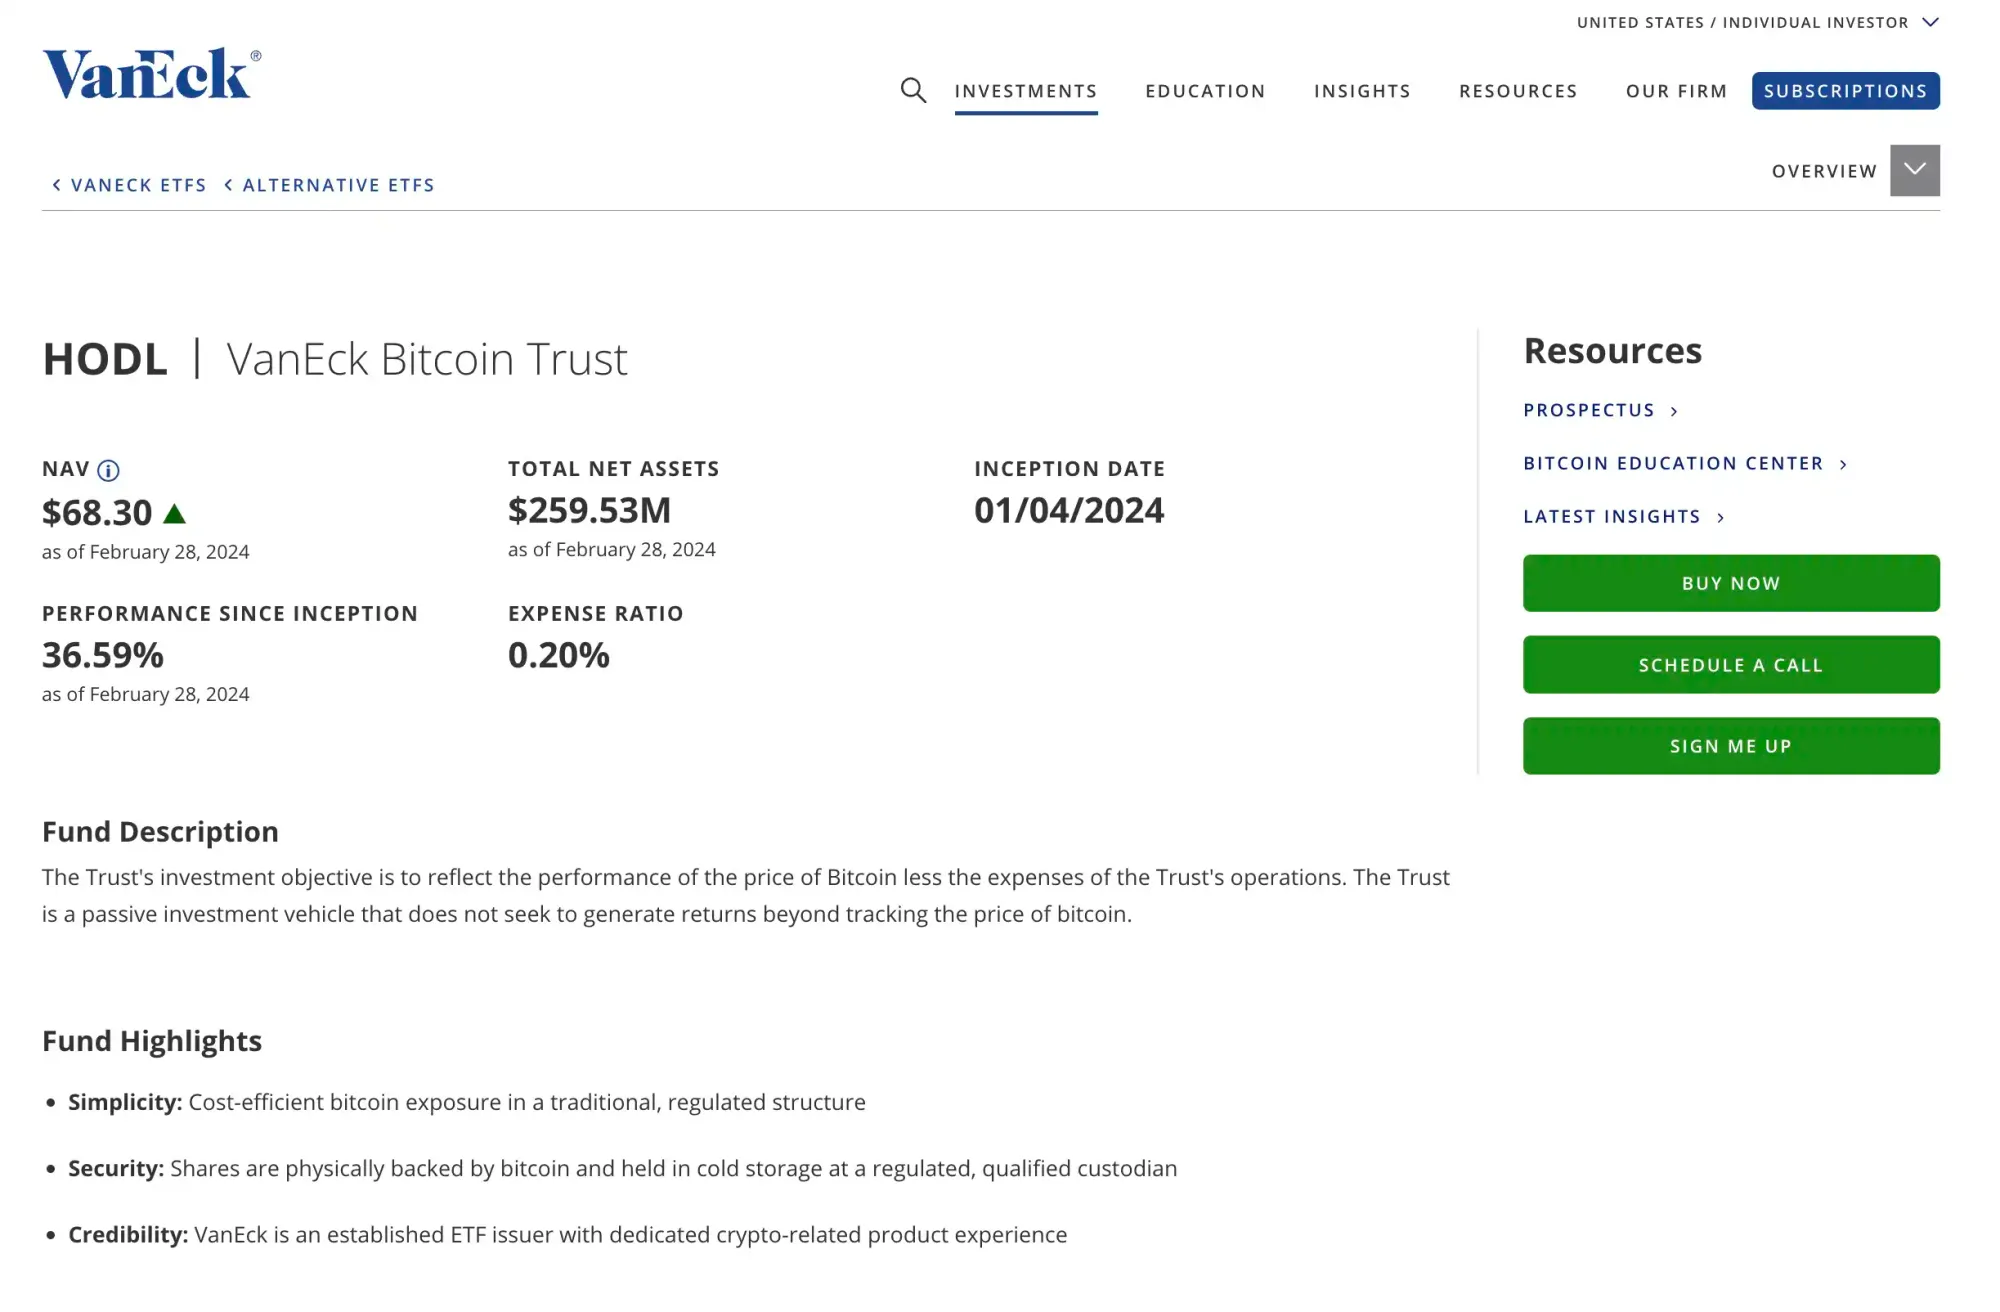 VanEck Bitcoin Trust (HODL)